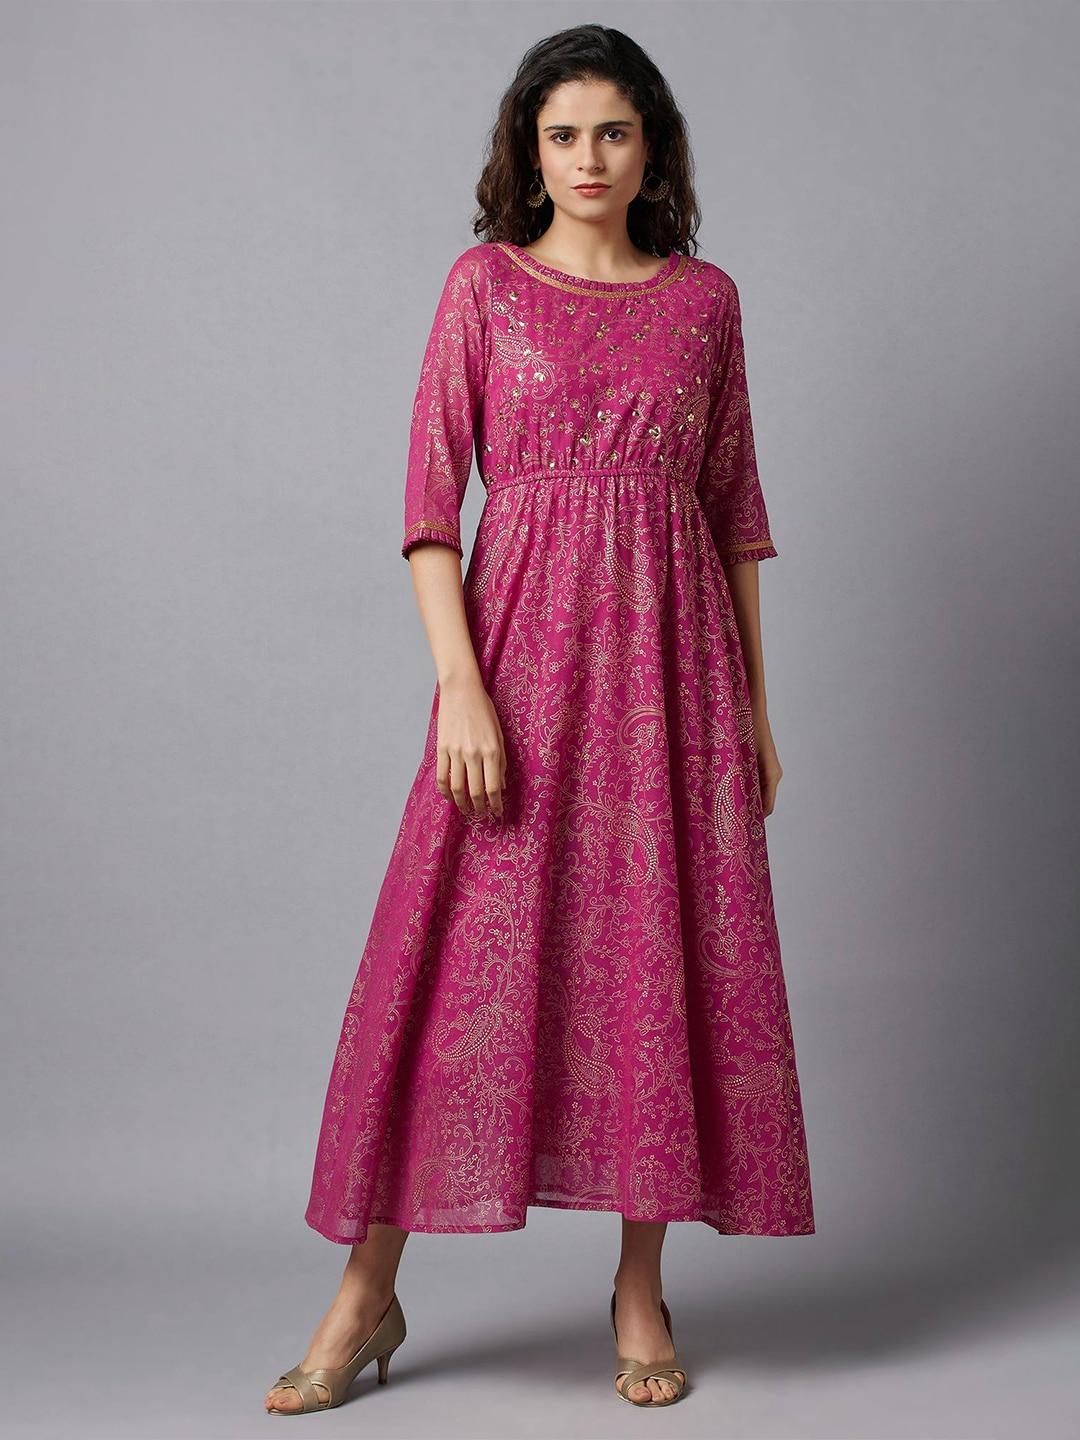 aurelia-pink-ethnic-motifs-embellished-three-quarter-sleeves-maxi-dress